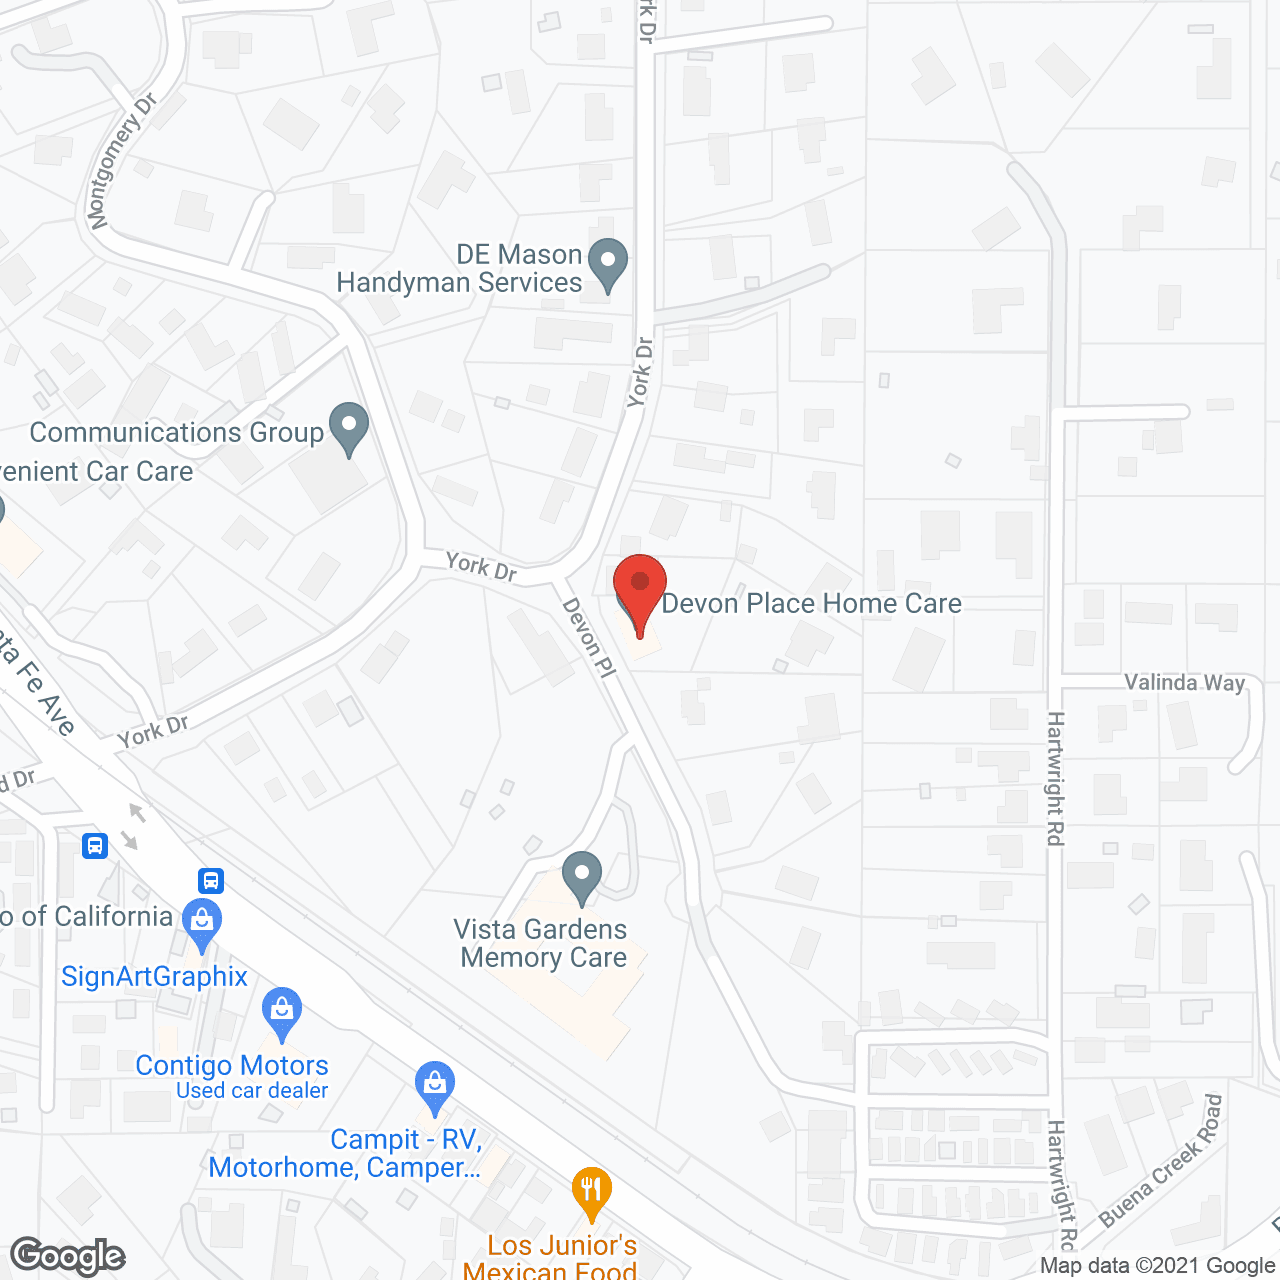 Devon Place Home Care in google map